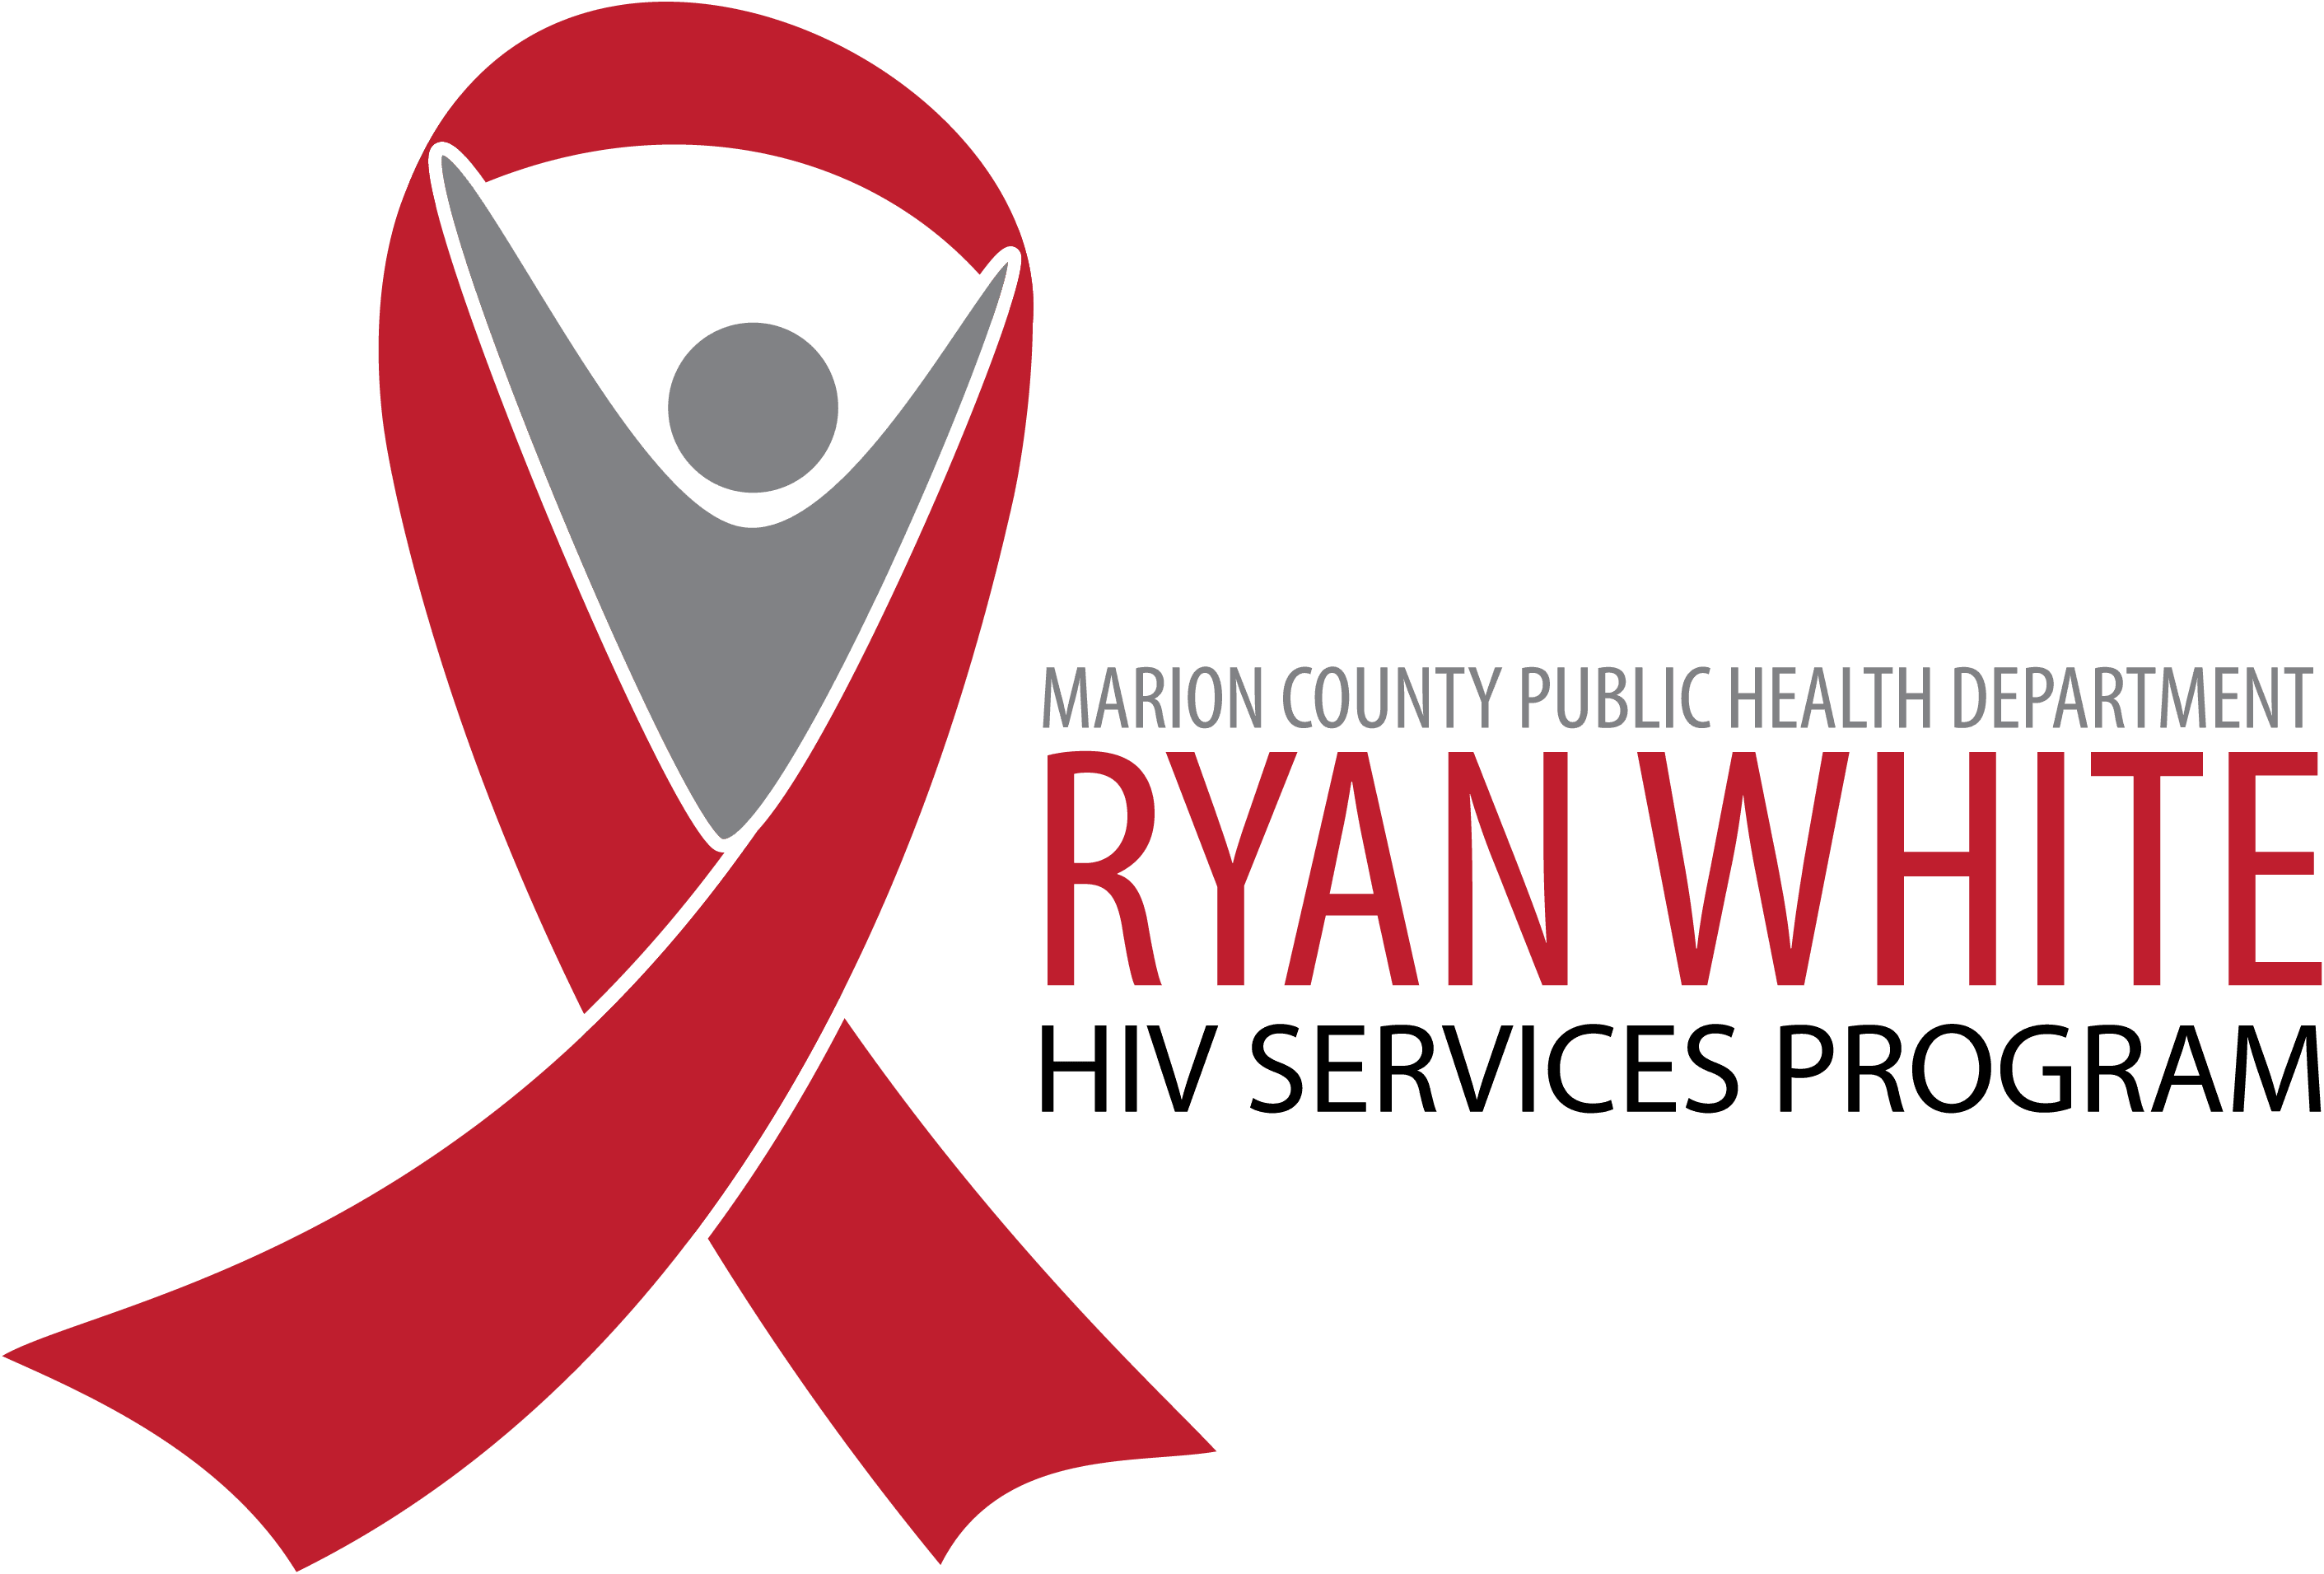 The Ryan White HIV Services Program